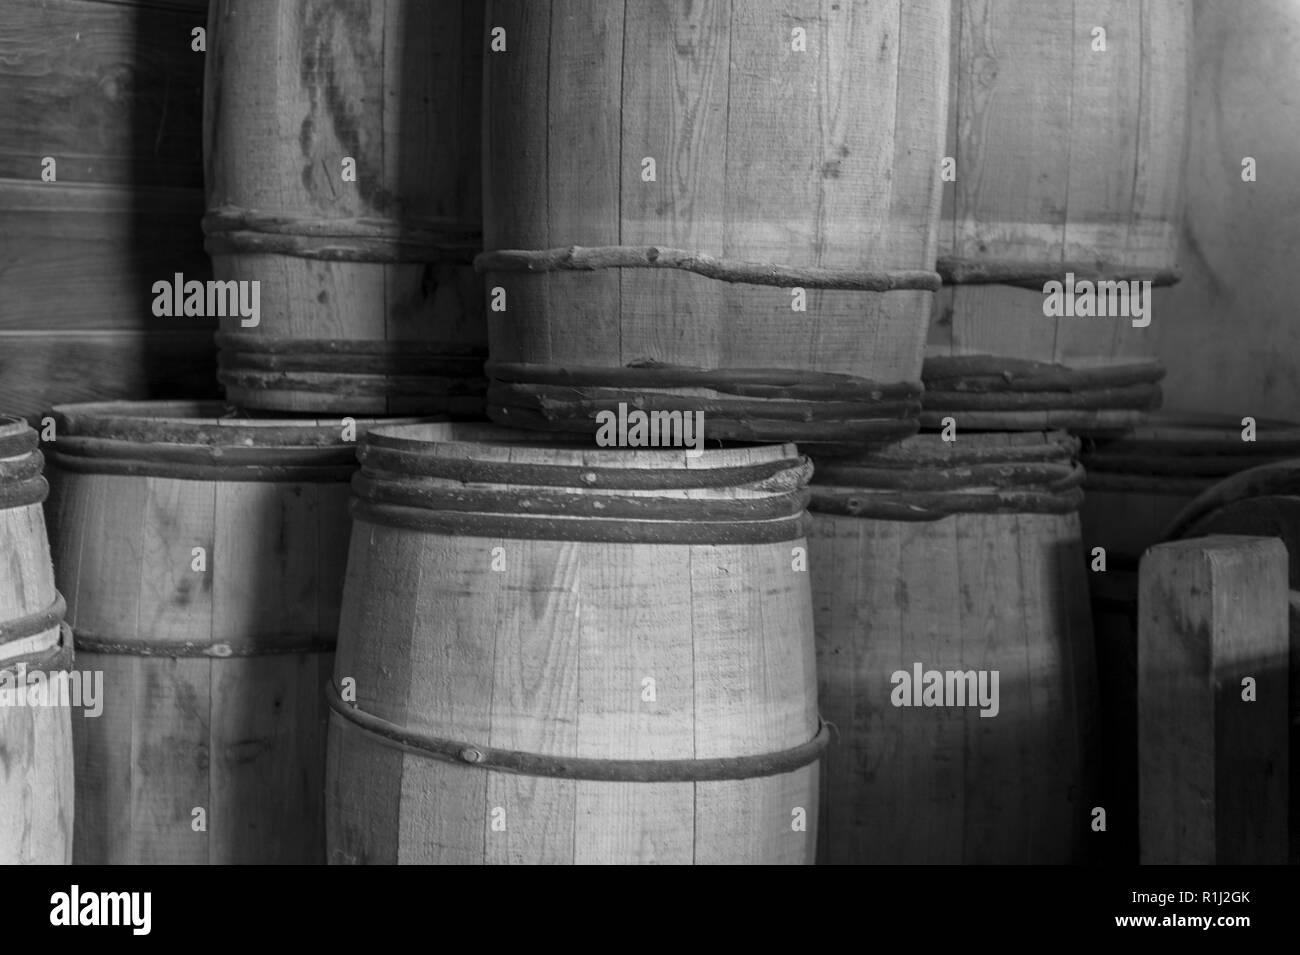 stockpile of old wooden barrels Stock Photo